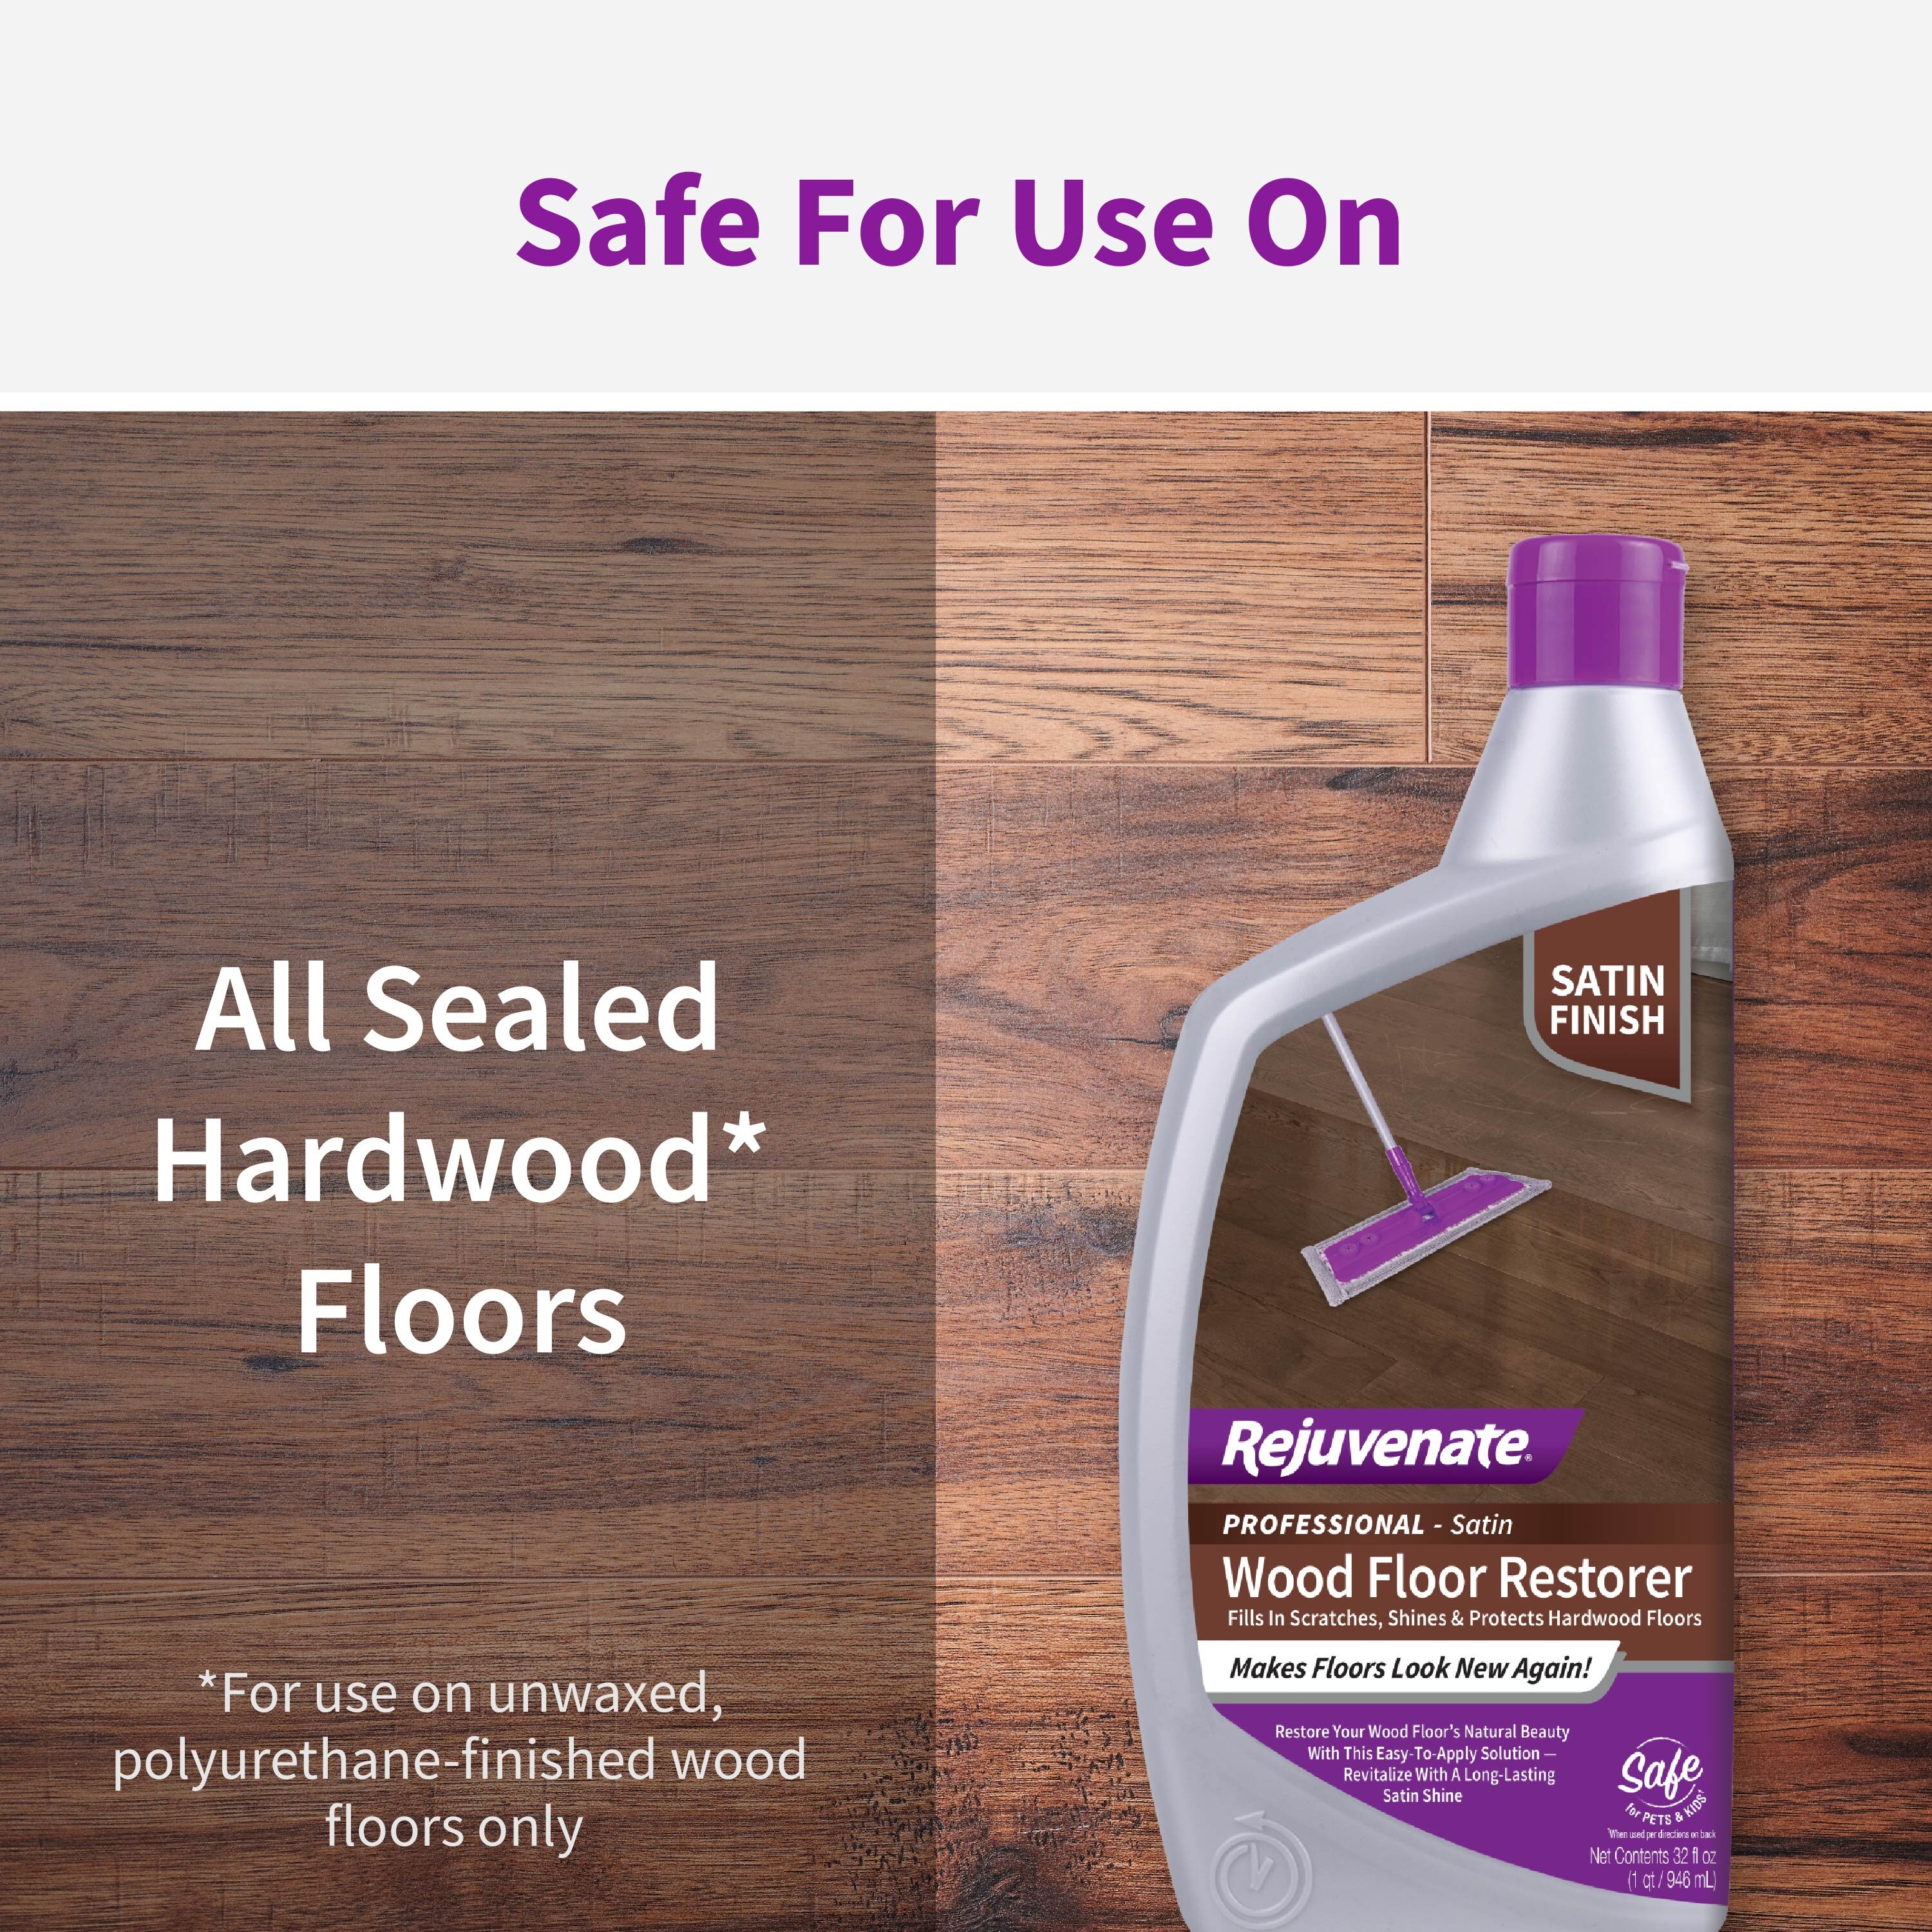 Rejuvenate Professional Hardwood Floor Cleaner